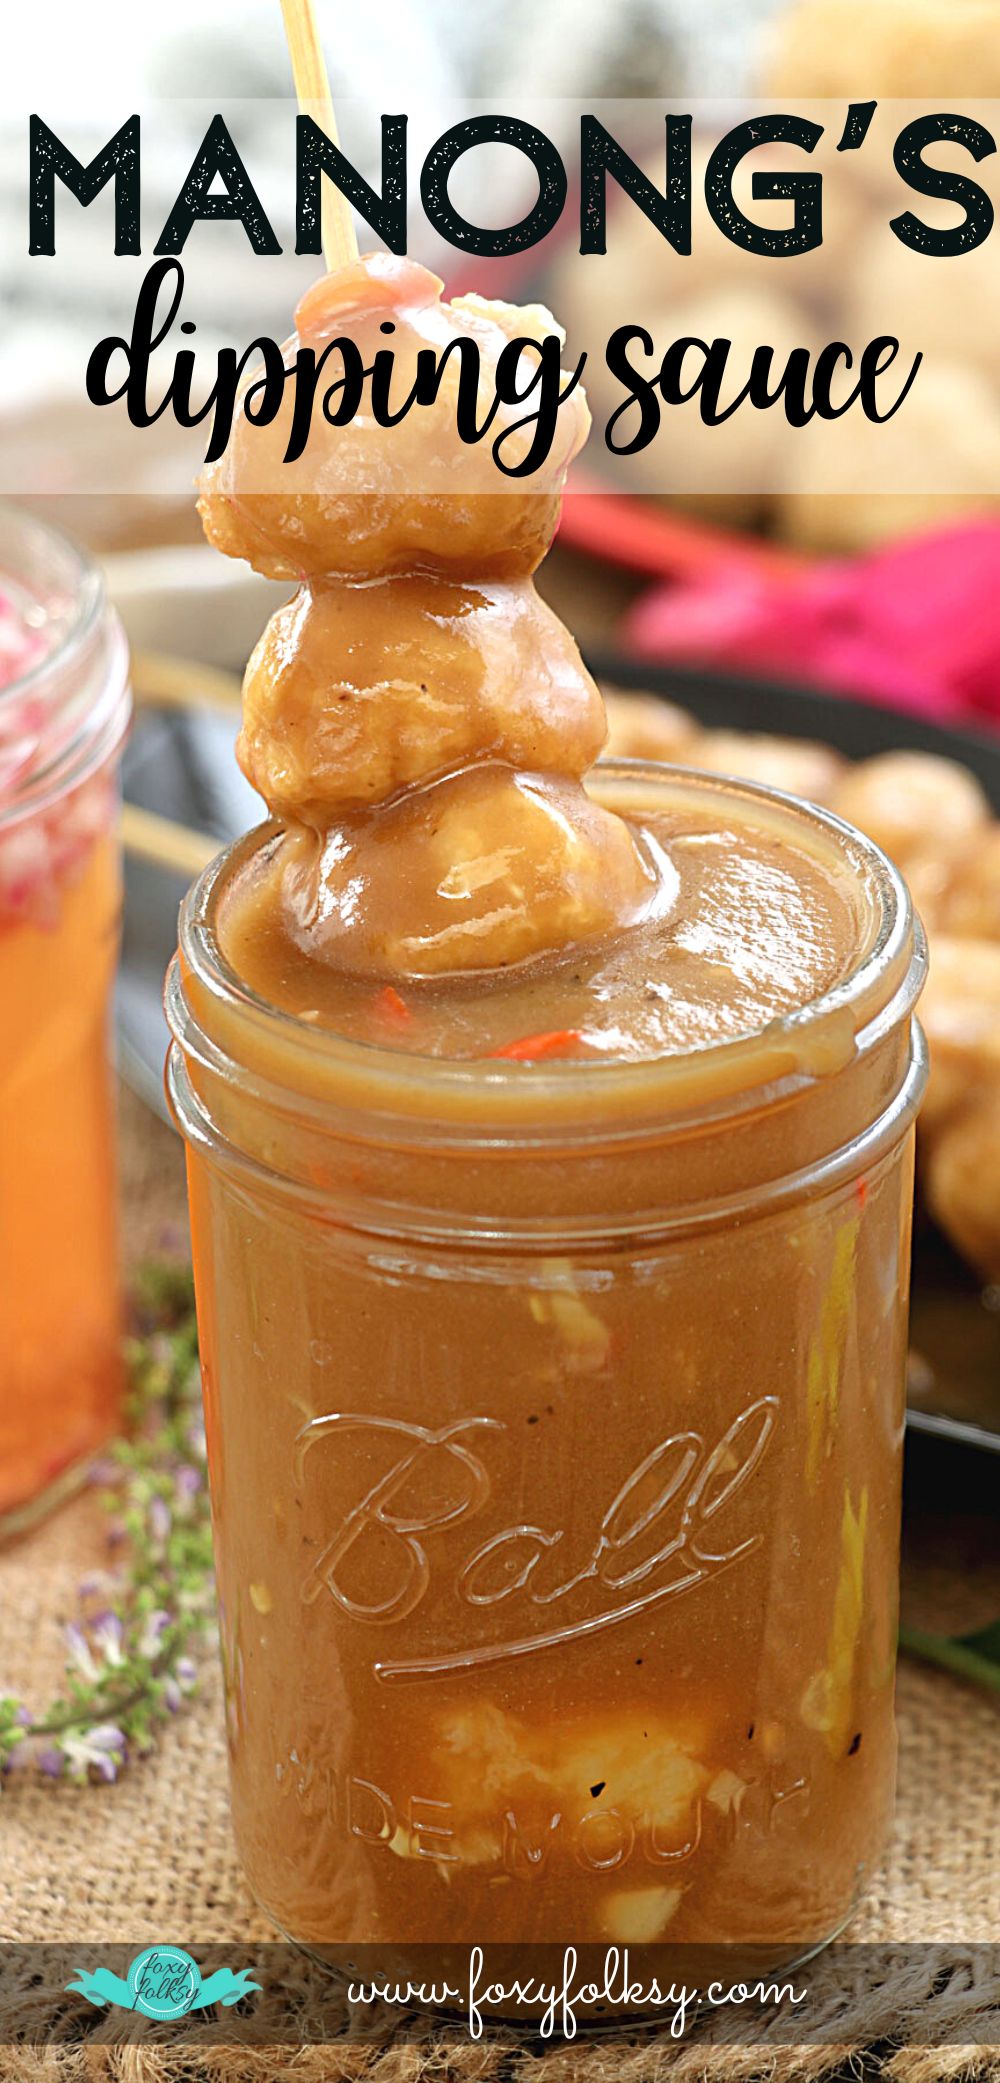 Fishball Sauce a.k.a. Manong's sauce in a jar.